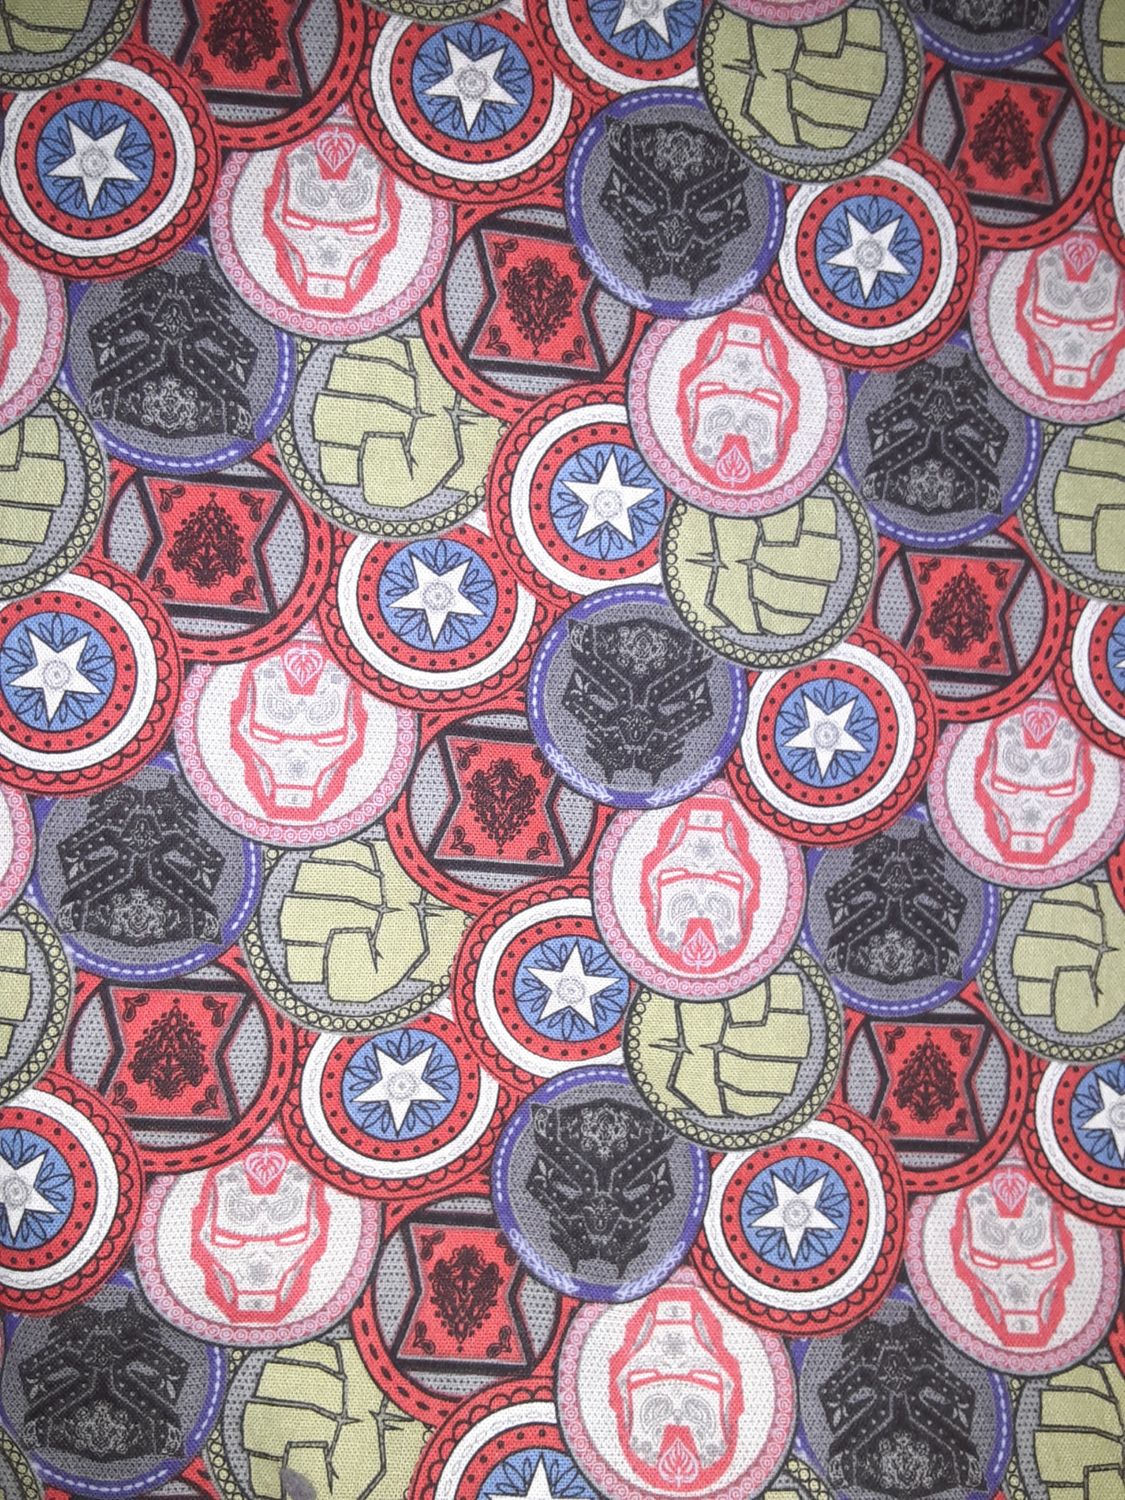 Marvel heroes' shields